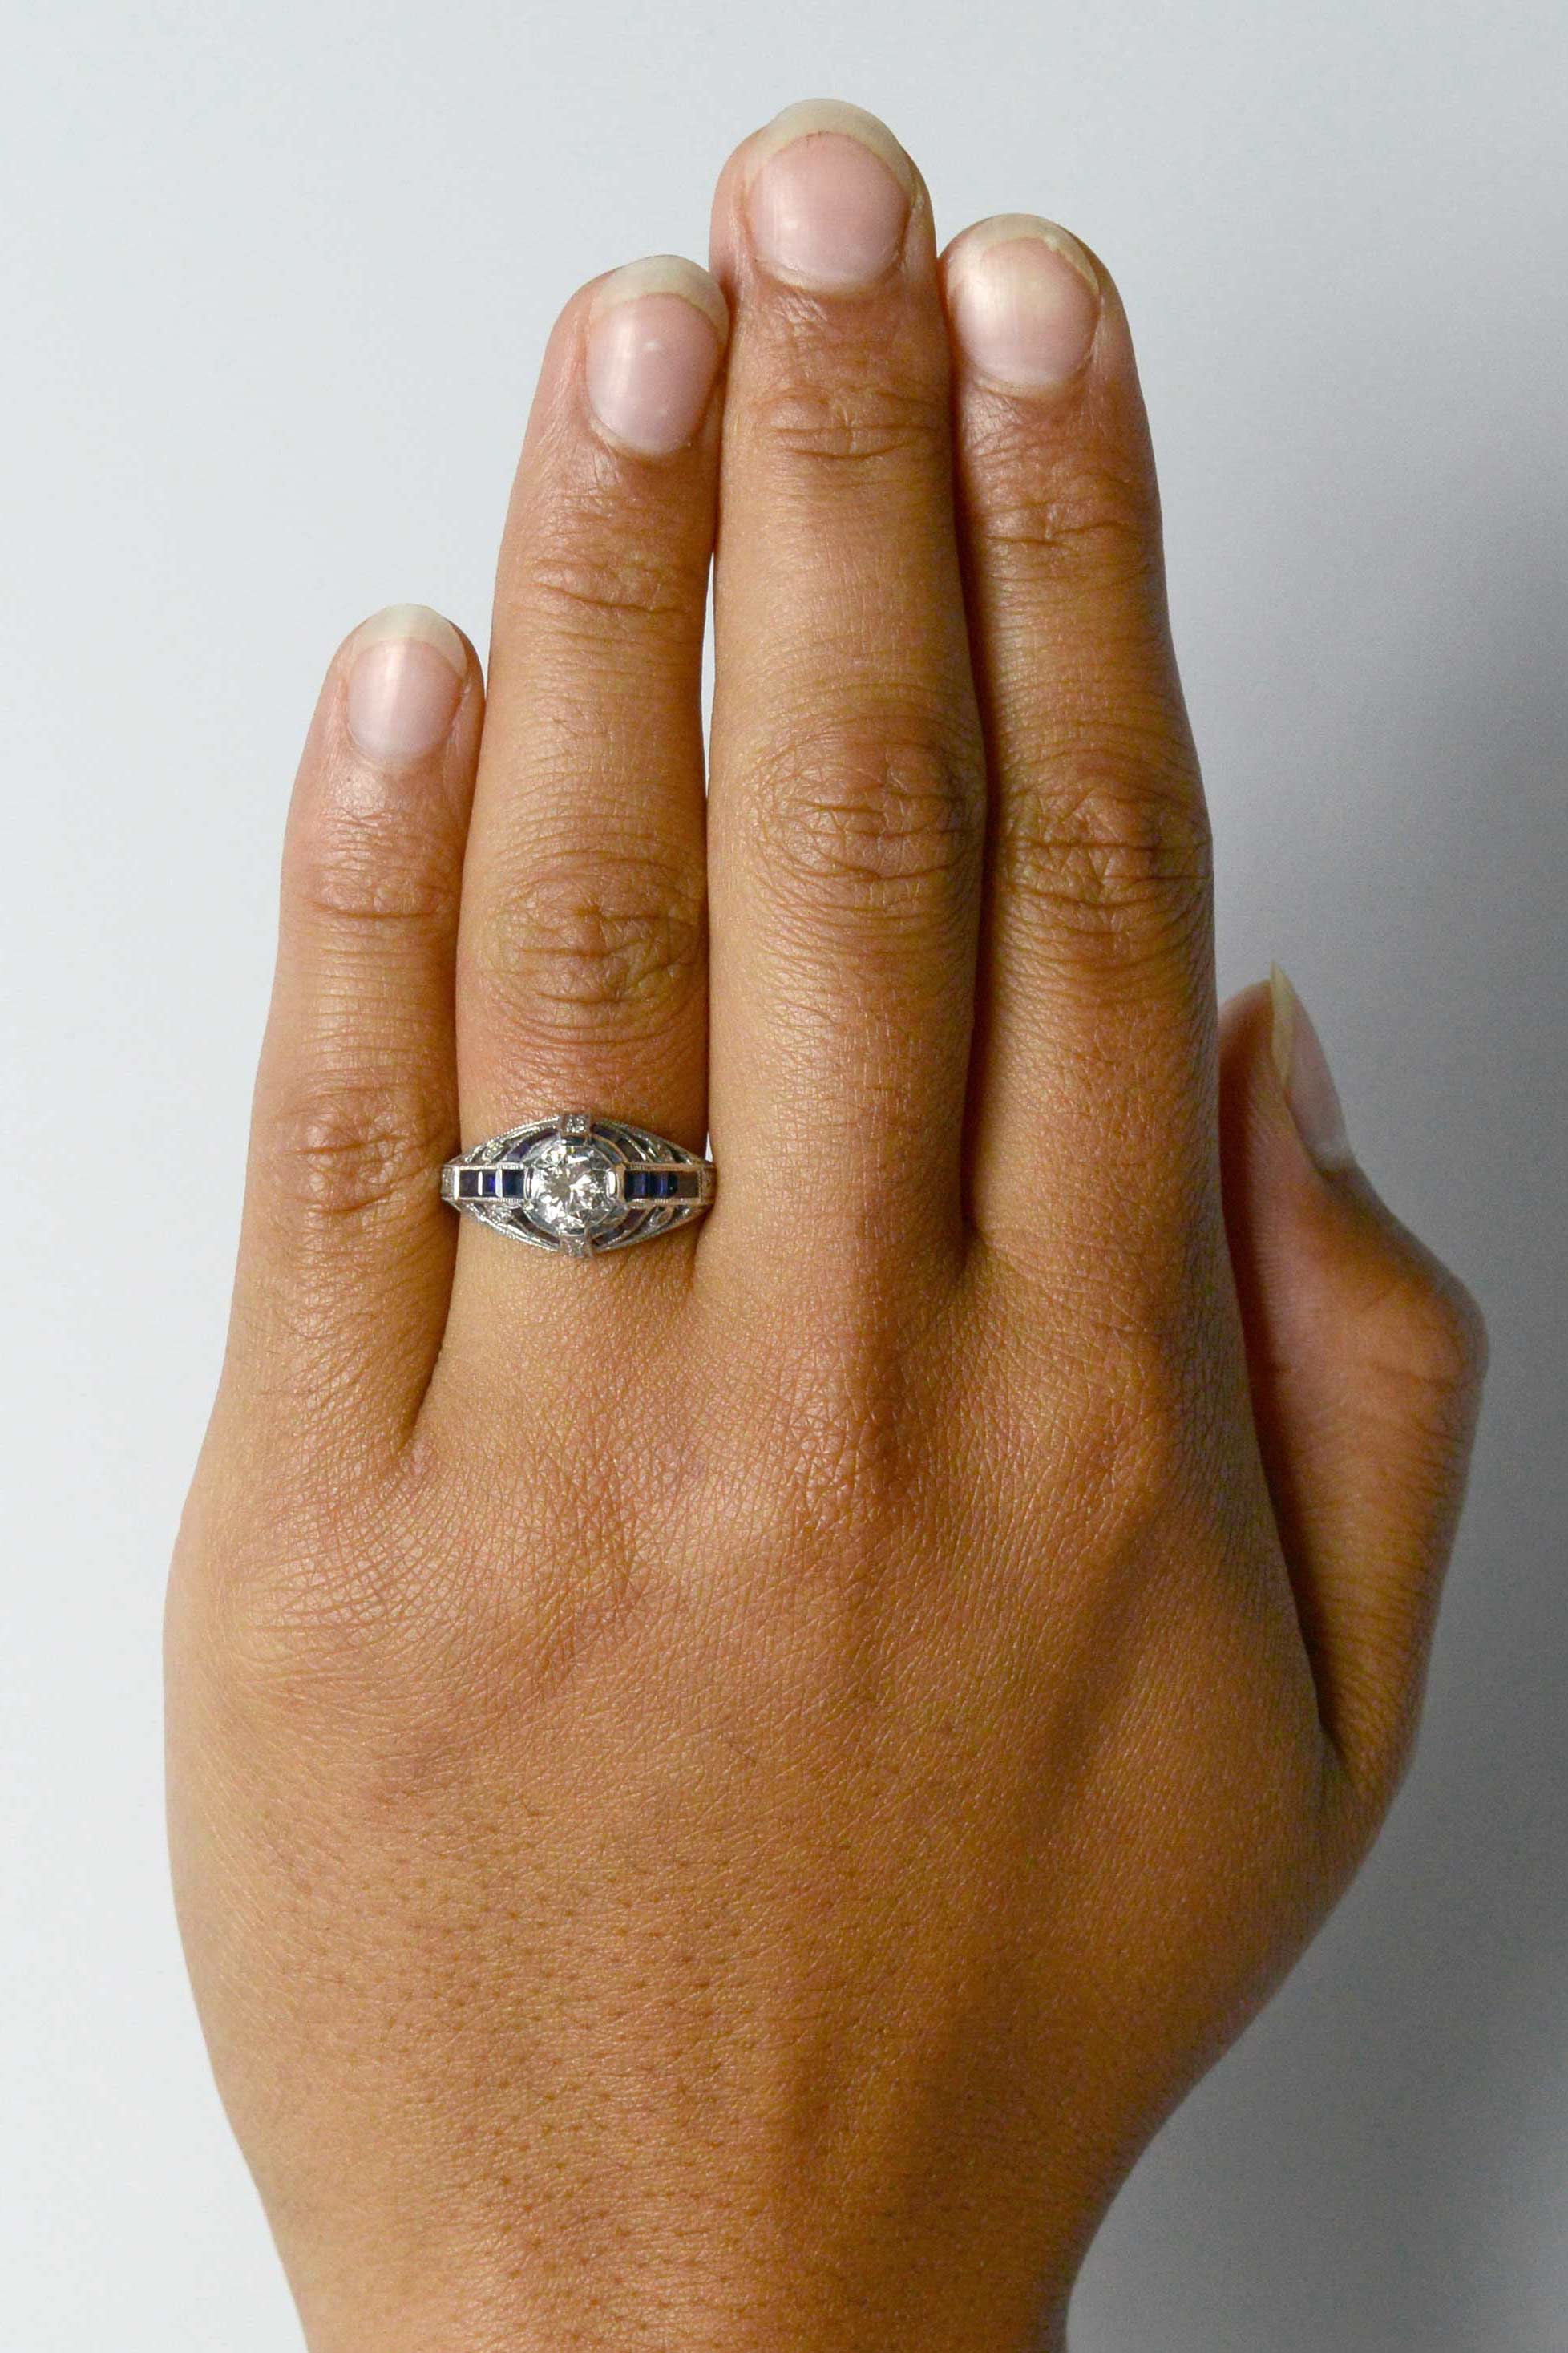 1 carat diamond Art Deco engagment ring with blue sapphires.